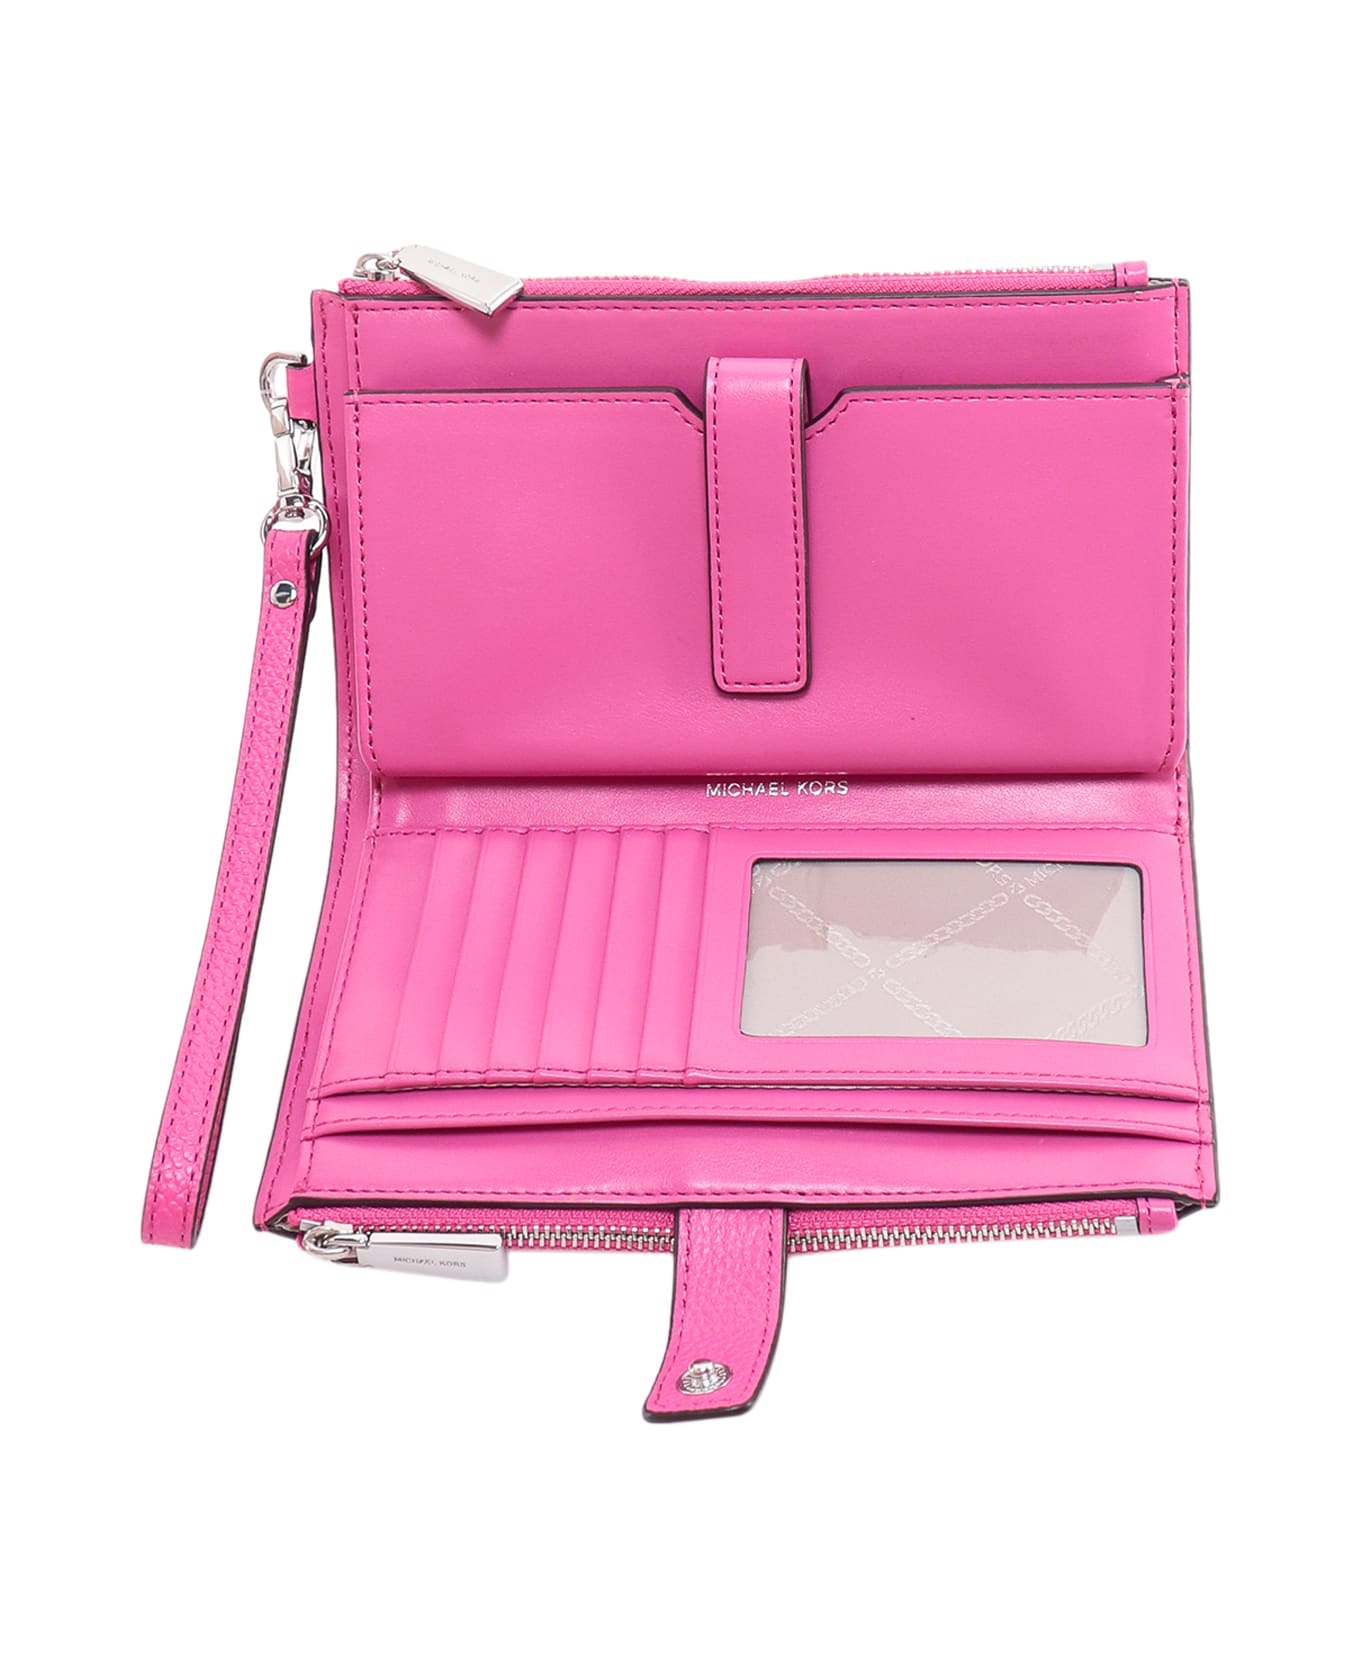 Michael Kors Jet Set Wallet - Pink 財布